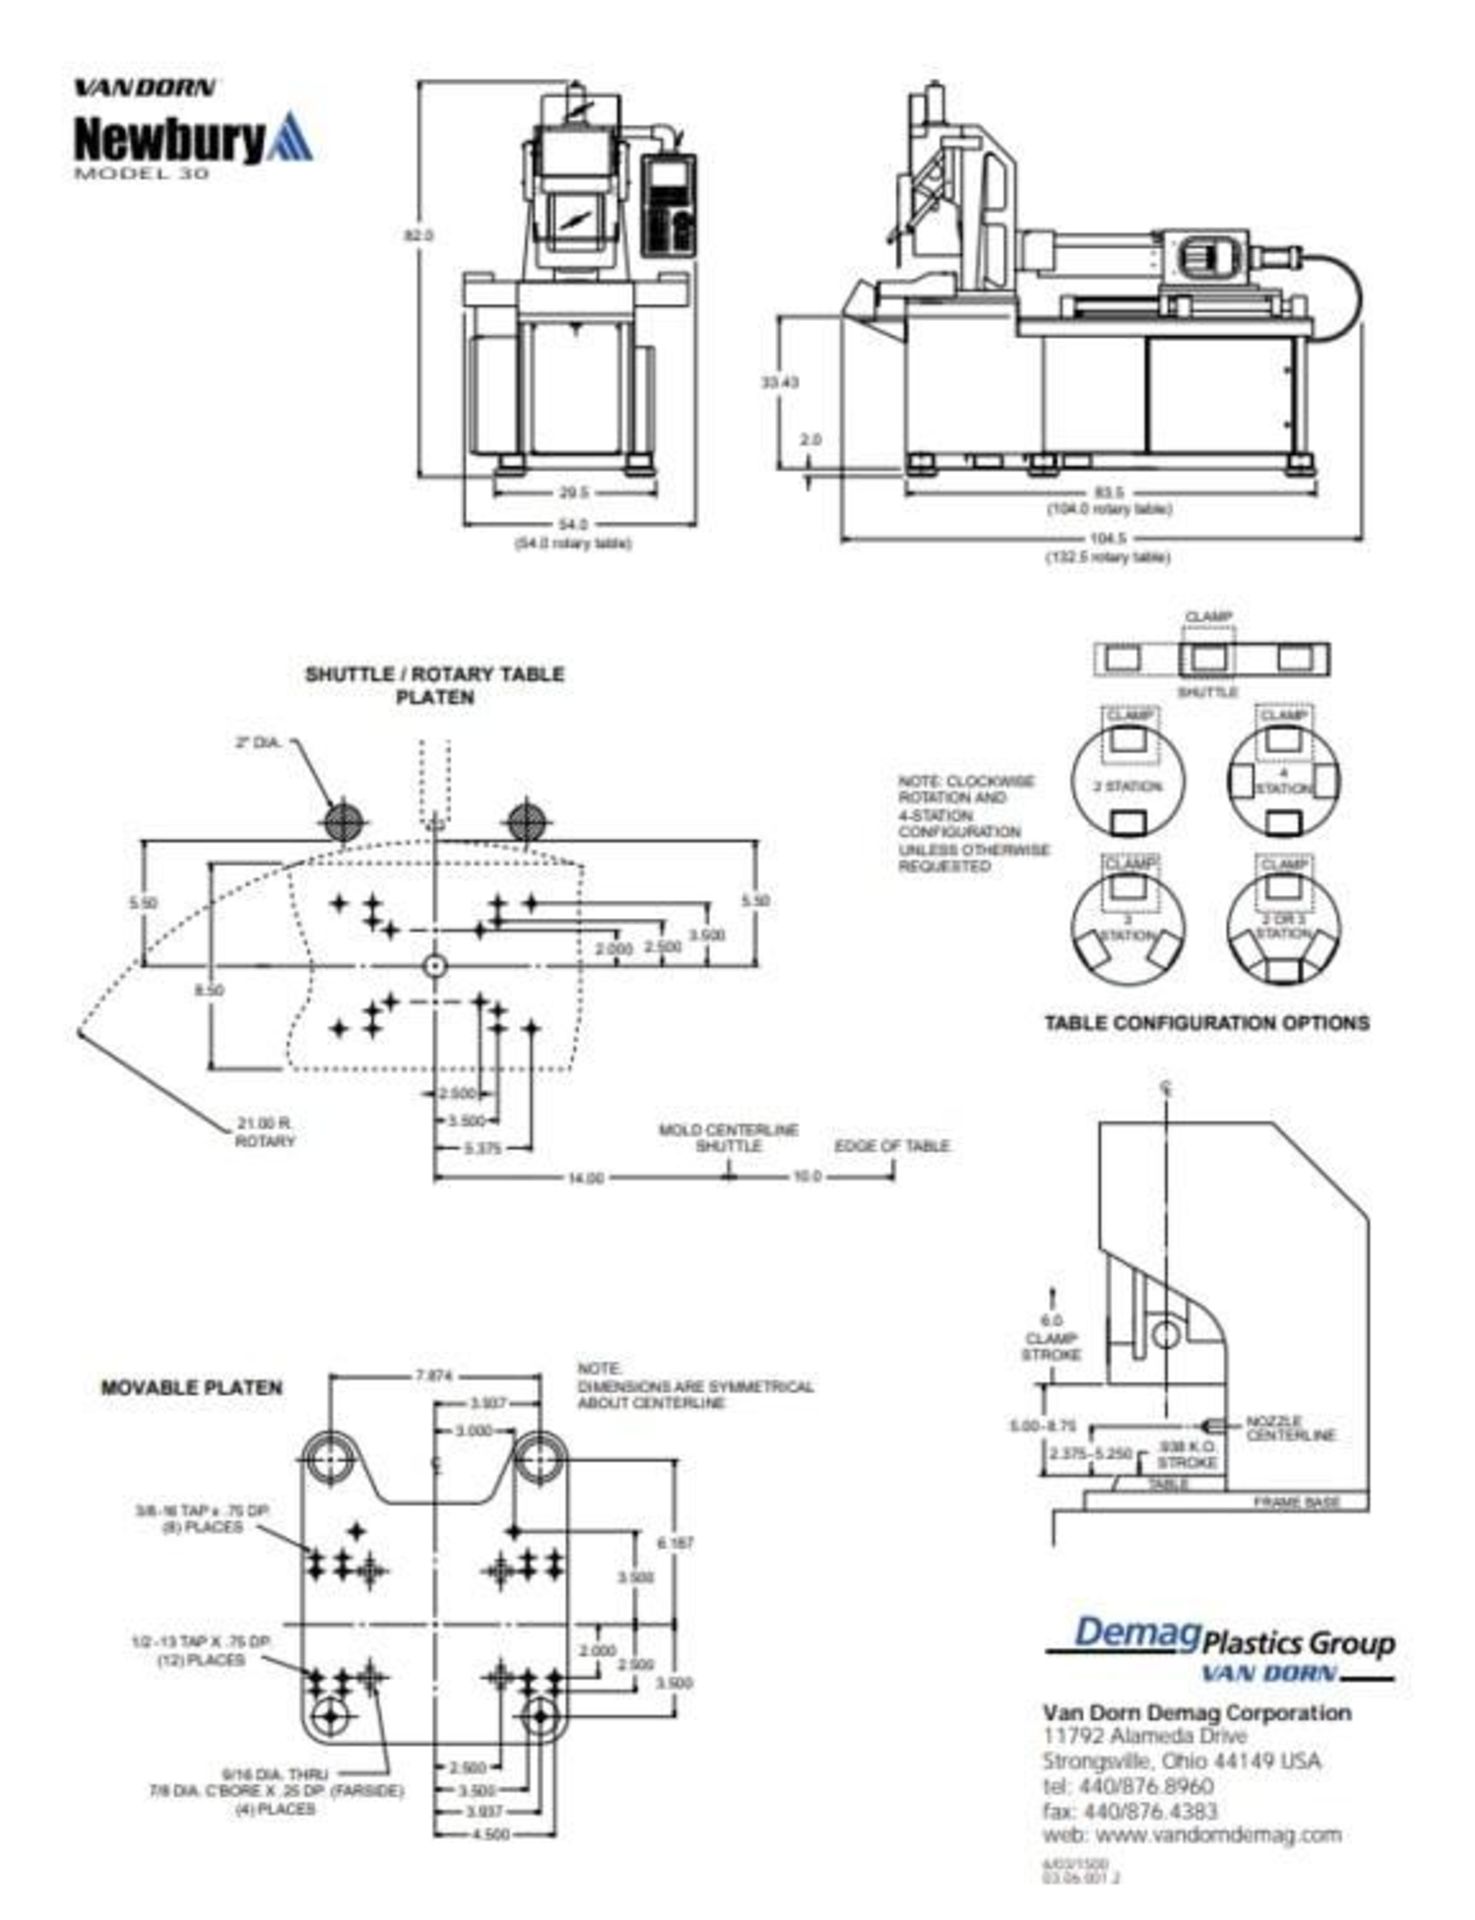 Van Dorn Demag Injection Molding Machine Model Newbury 30, Model 30VTCR3-0148, S/N 0148, New 2001 (L - Image 12 of 12